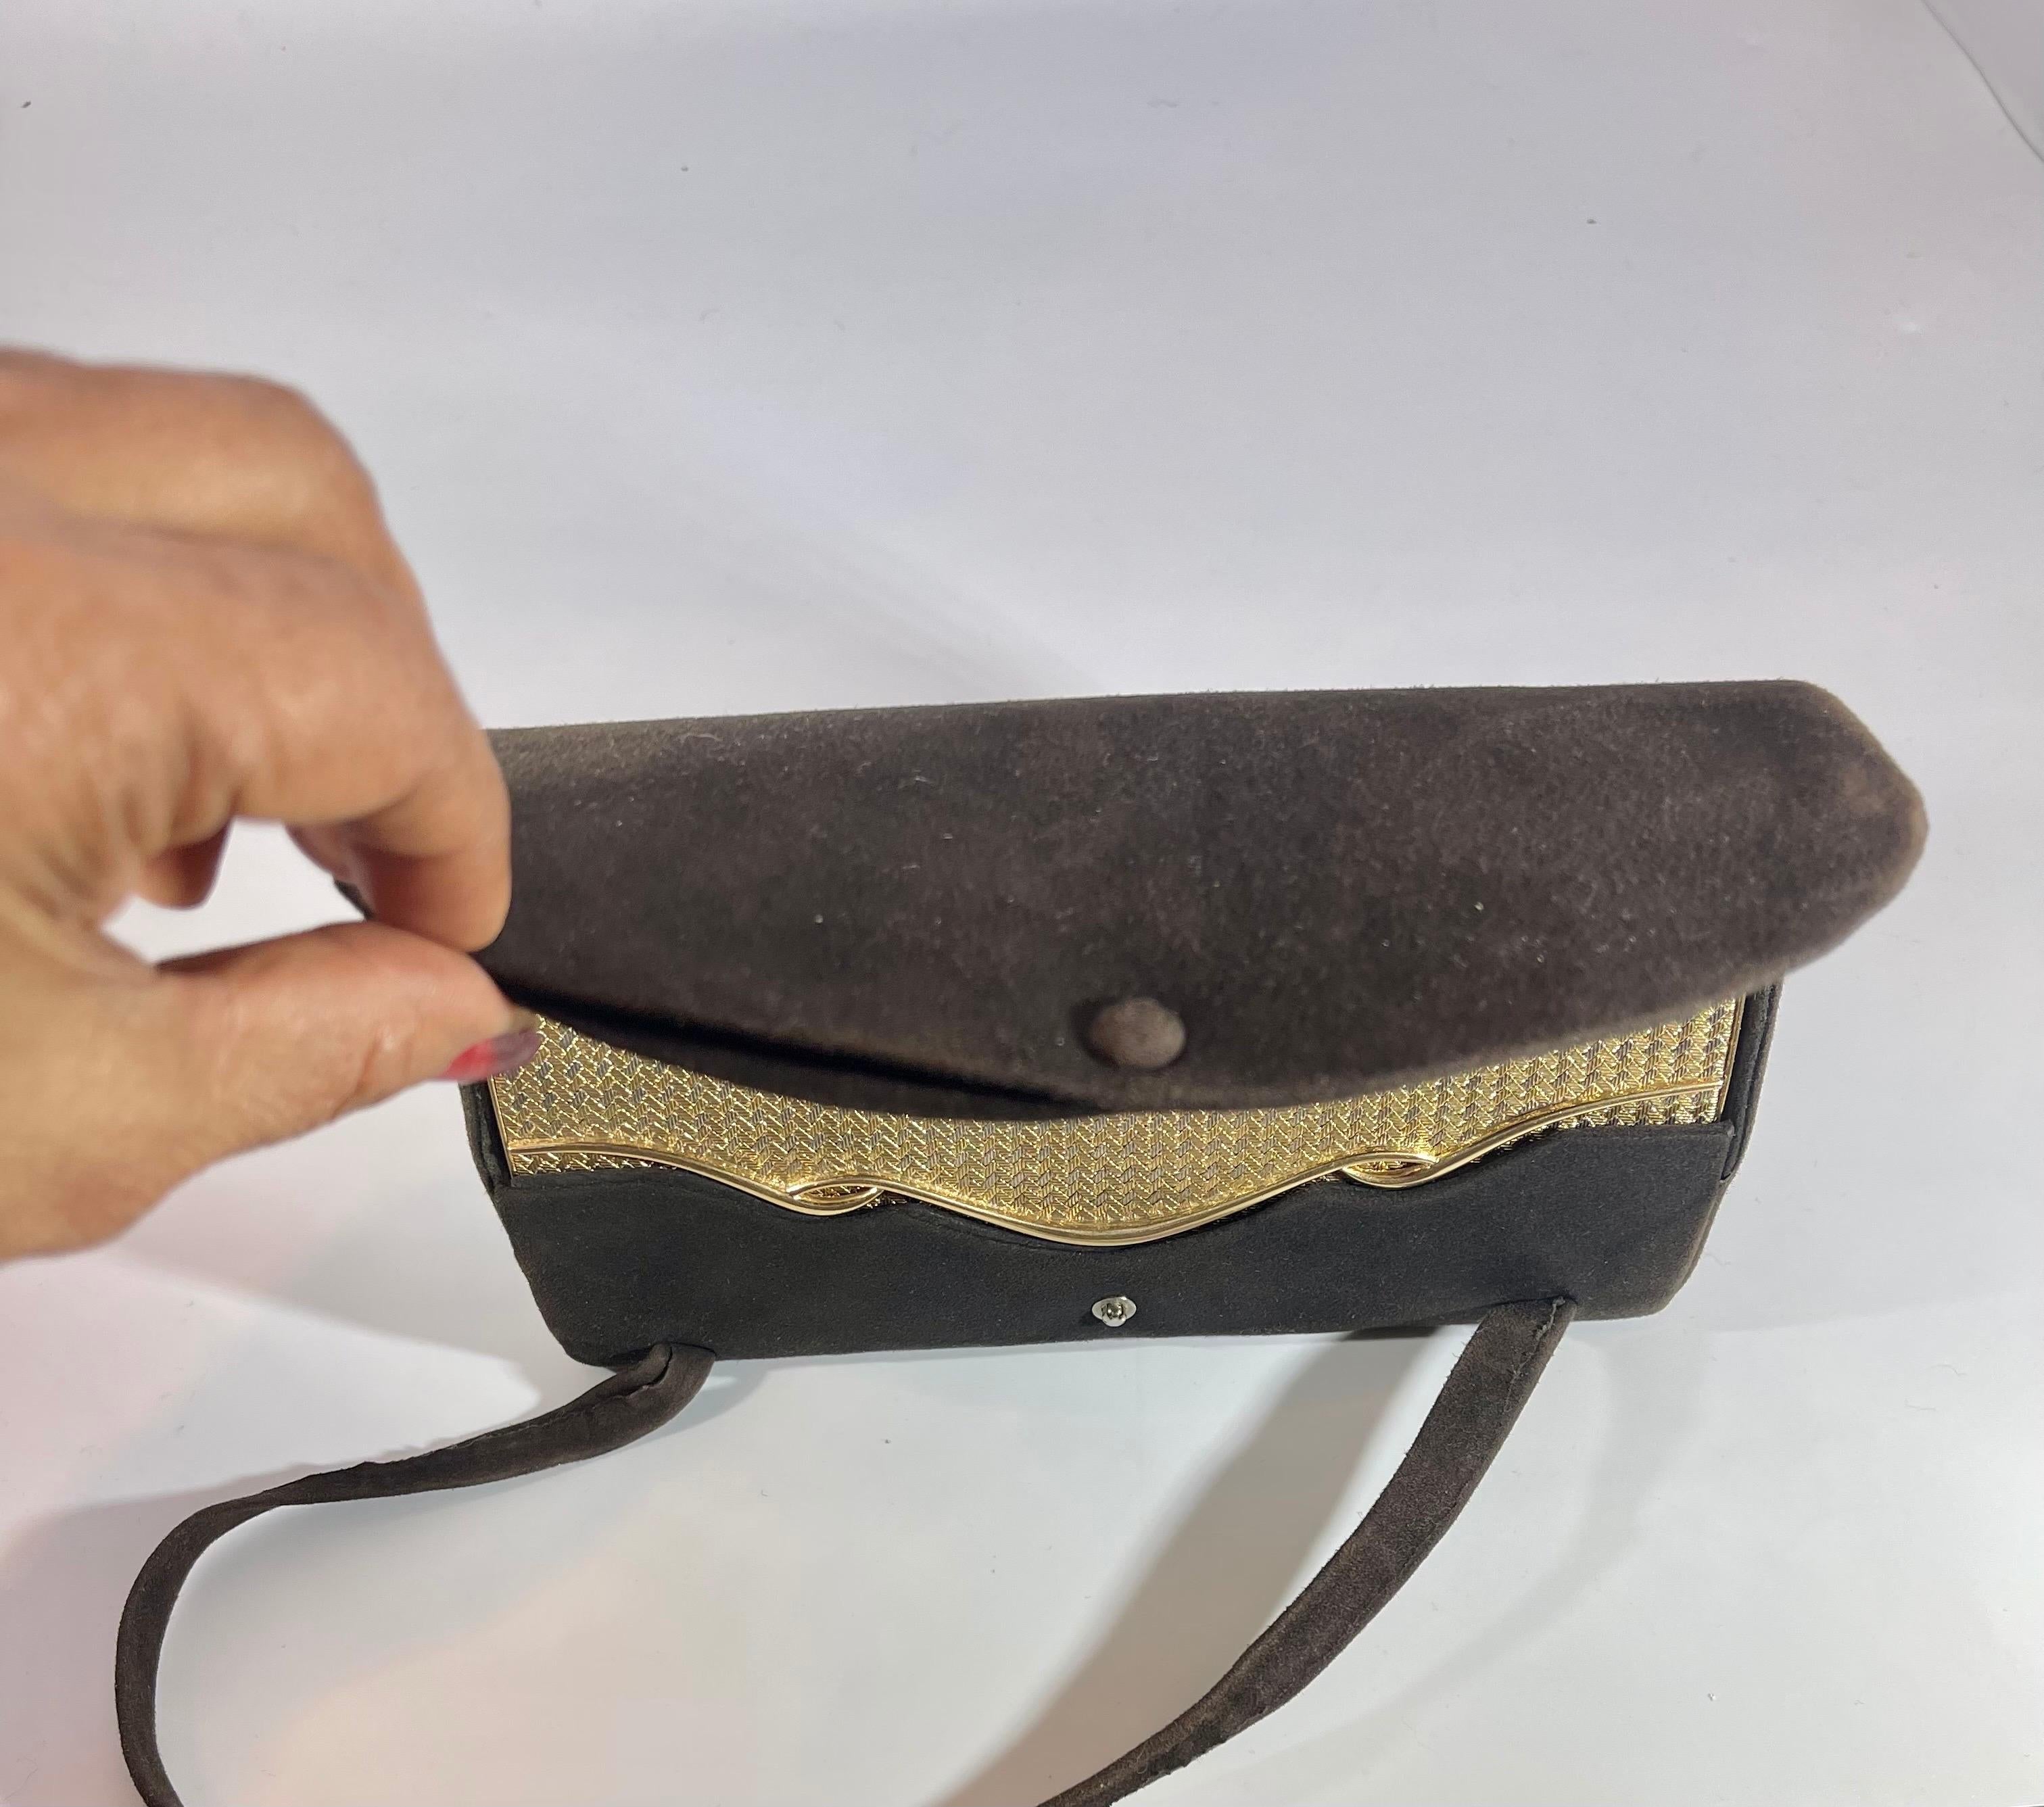 Van Cleef & Arpels 18K Yellow Gold Mesh Clutch Handbag with Mirror Inside, Rare For Sale 5